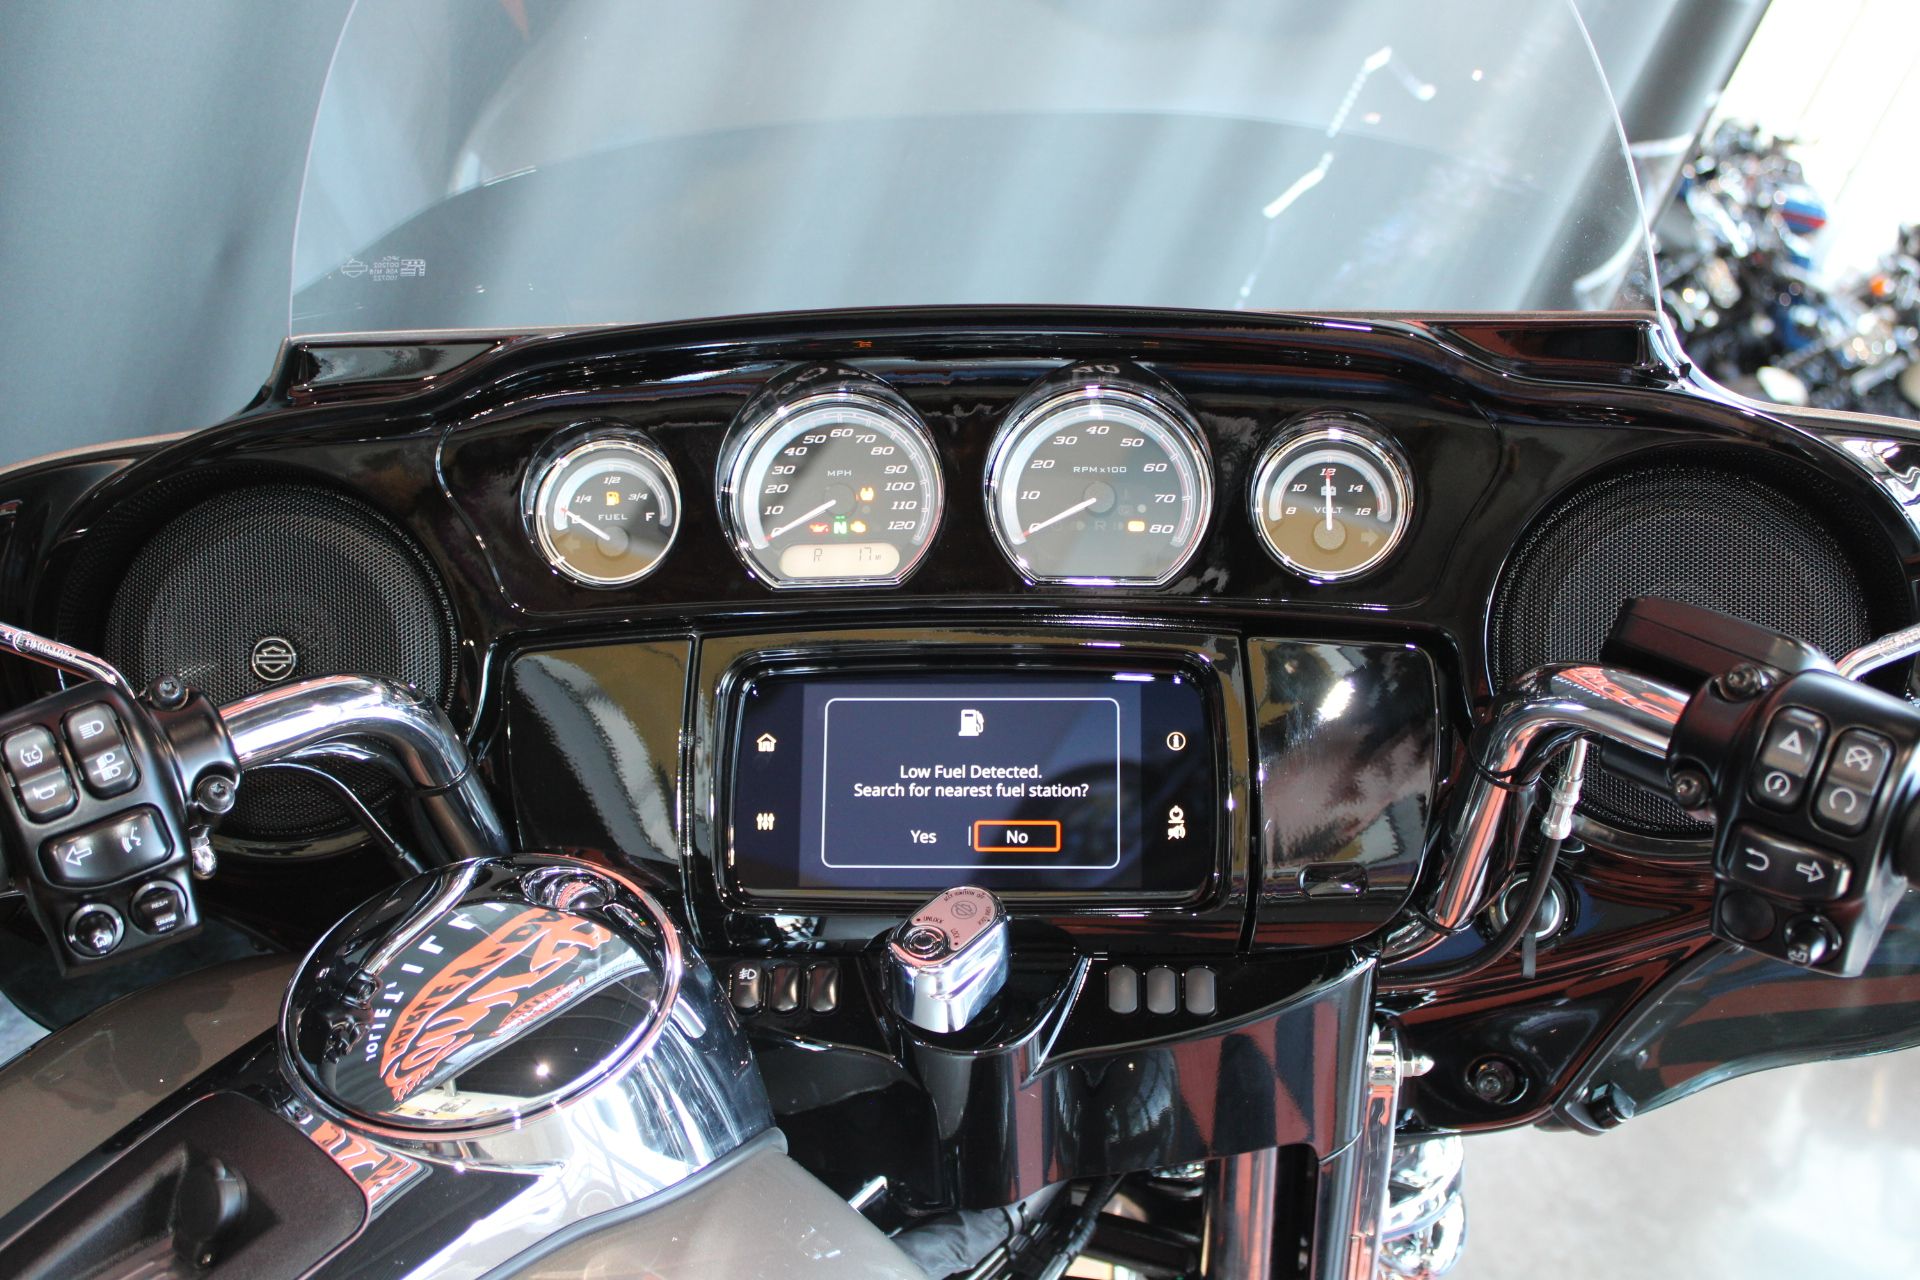 2023 Harley-Davidson Ultra Limited in Shorewood, Illinois - Photo 11